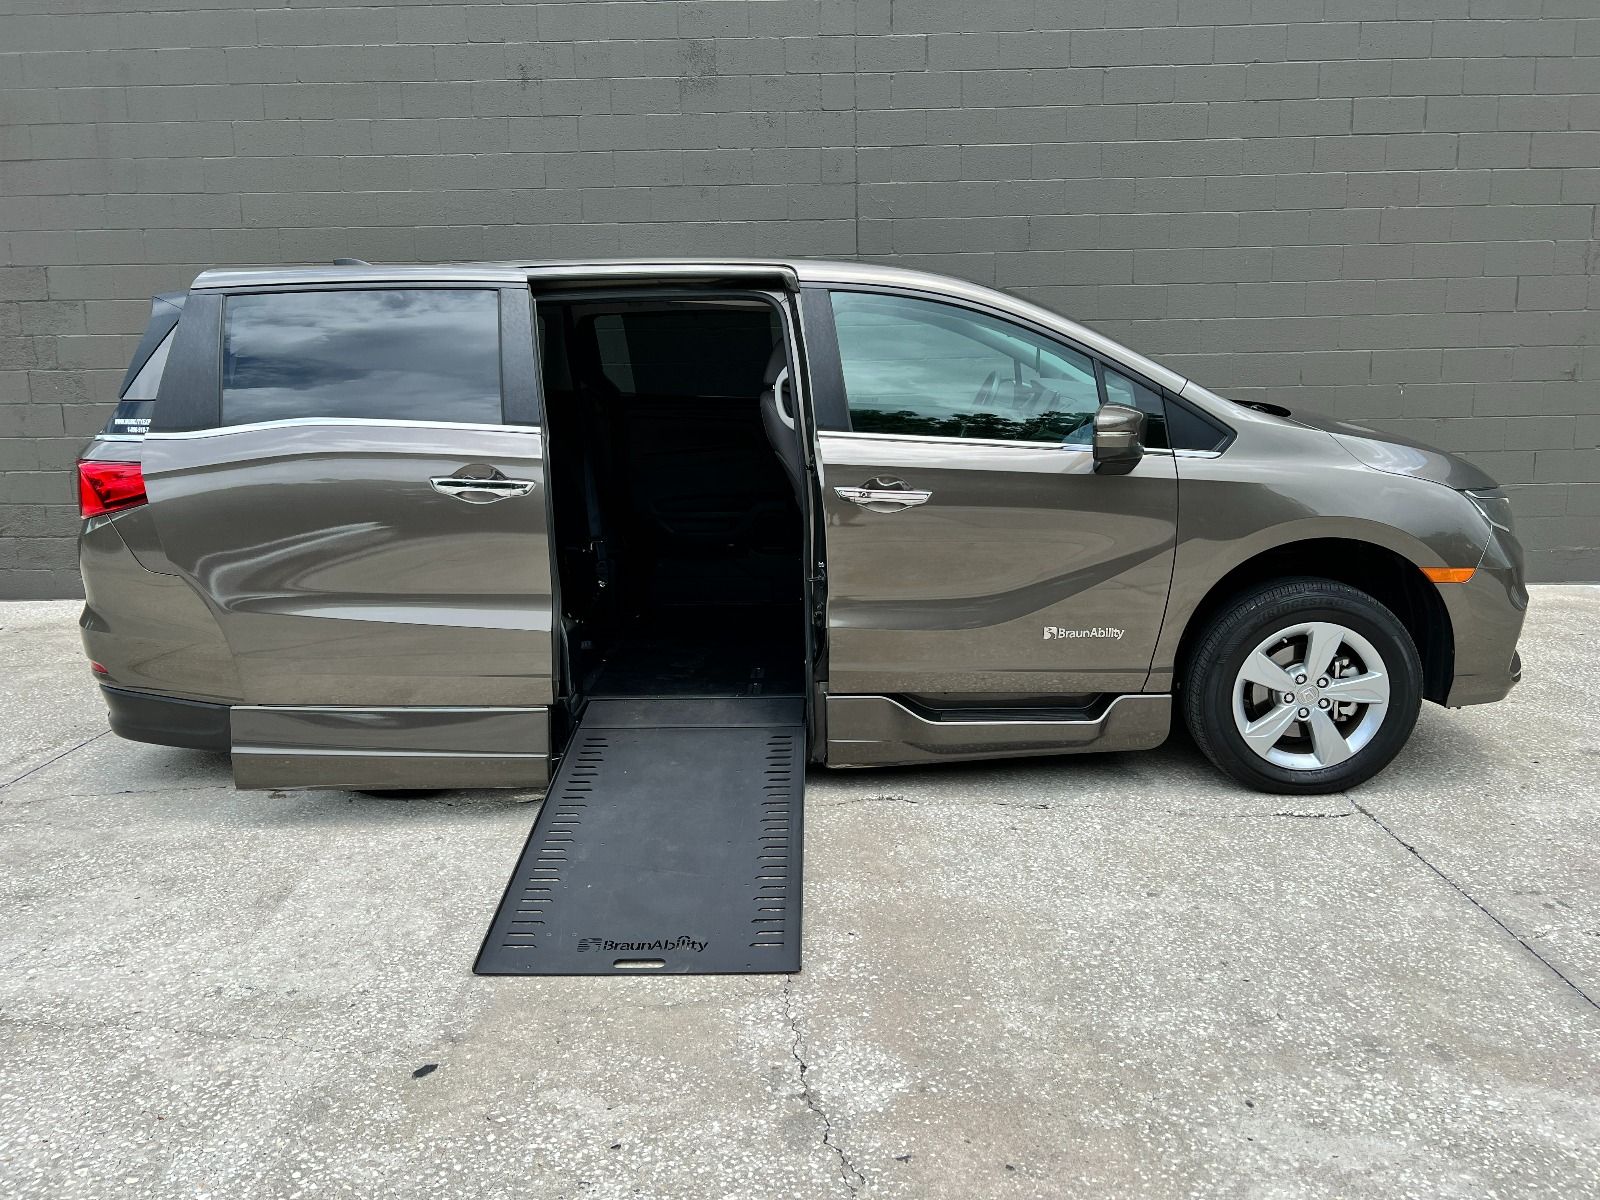 Gray 2019 Honda Odyssey Wheelchair Van with ramp deployed, as seen from passenger side.